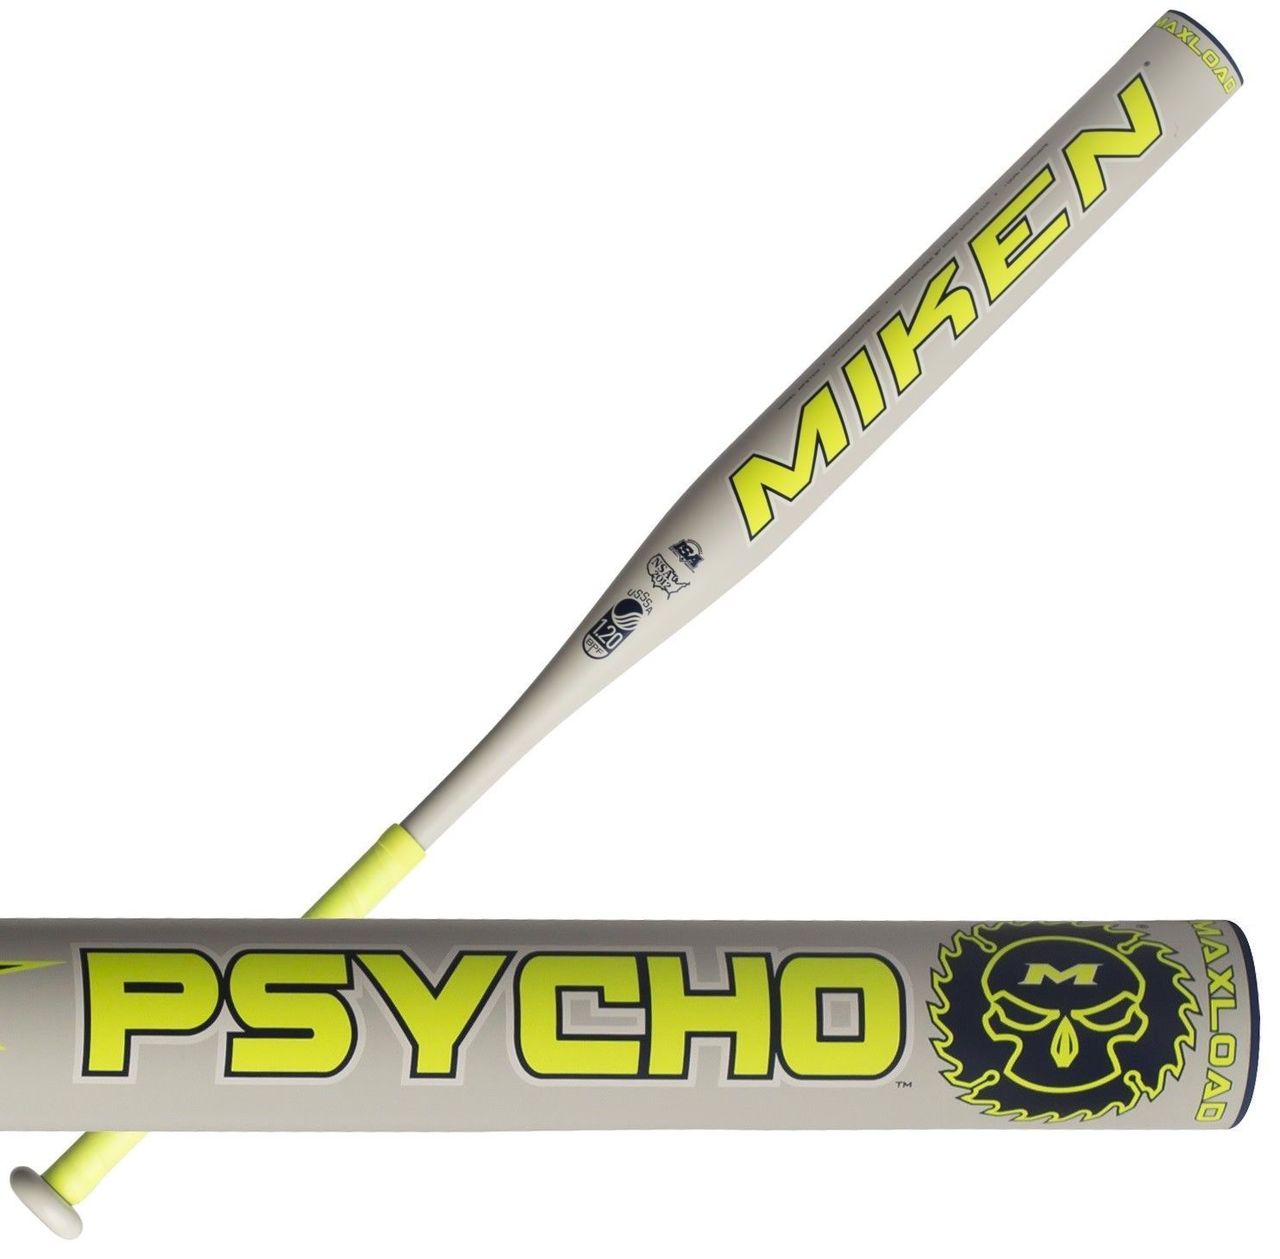 miken-psycho-max-usssa-slowpitch-softball-bat-mpsyco-34-inch-27-oz MPSYCO-3-27 Miken 658925040795 <p>Miken one piece composite slowpitch USSSA softball bat.</p>   